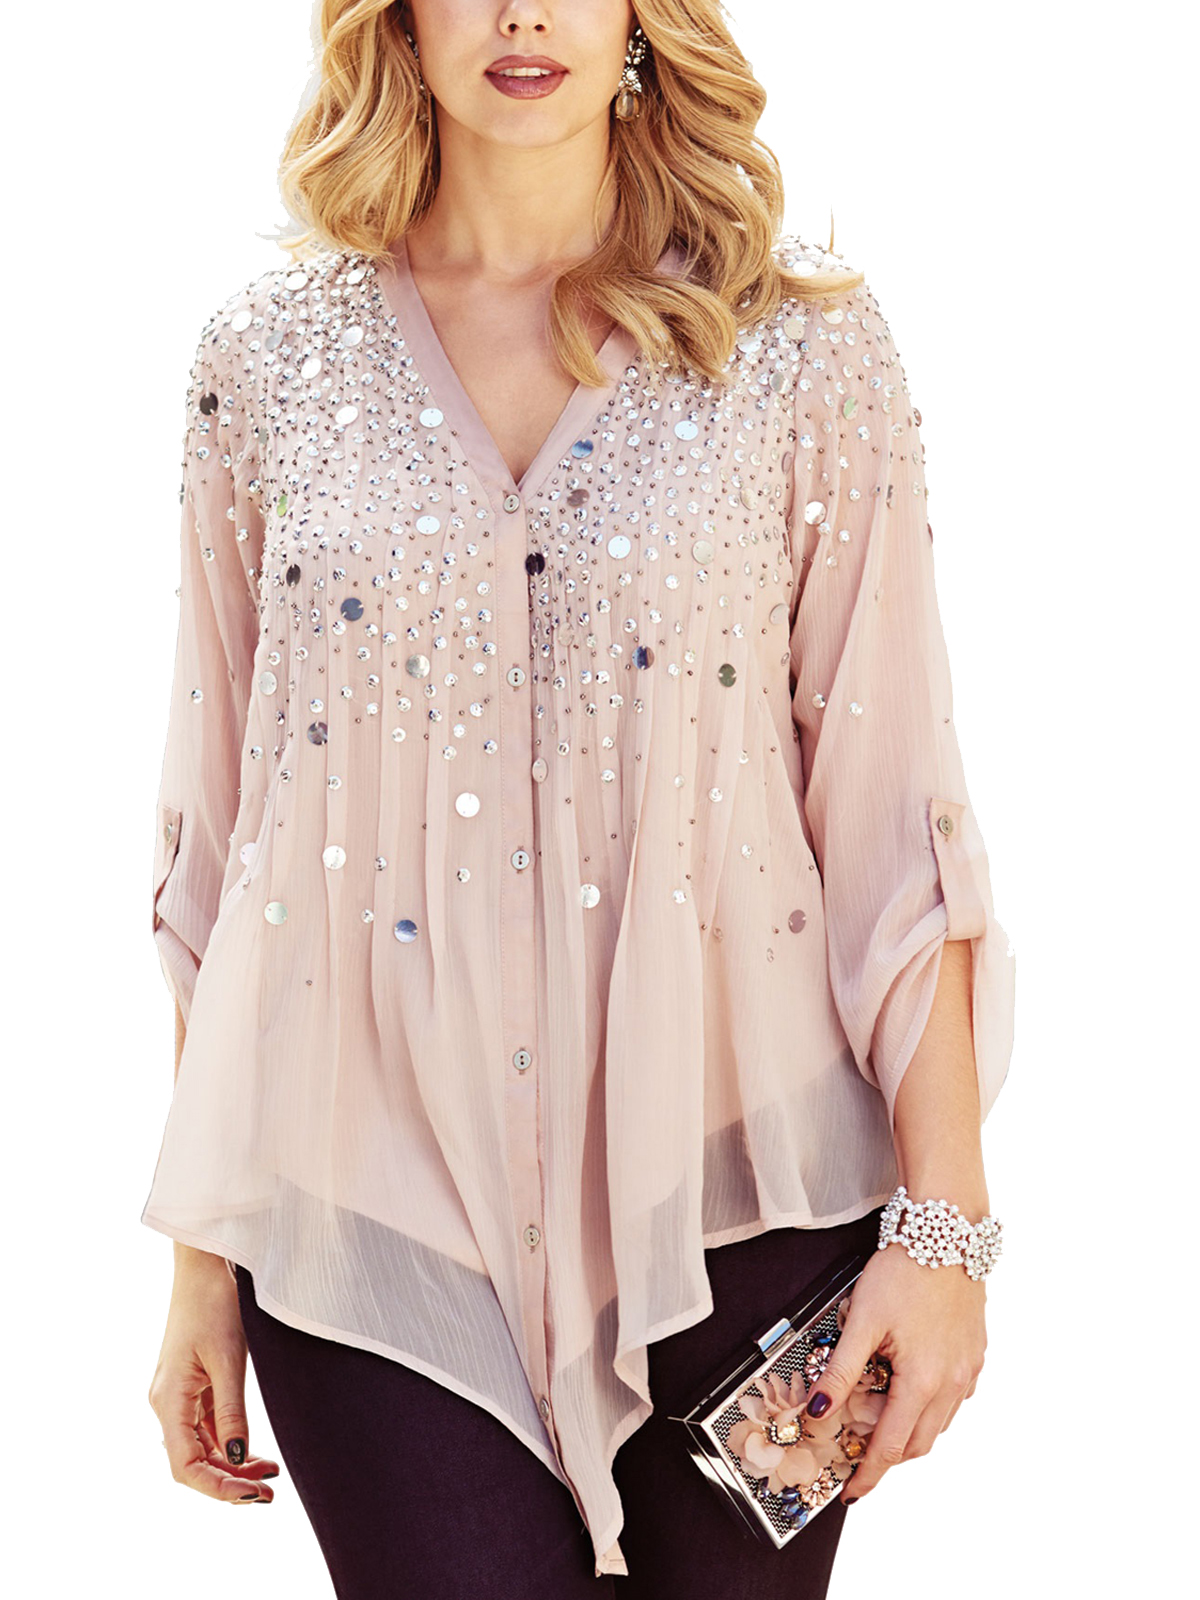 Roaman's - - Roamans ANTIQUE-BLUSH Glam Sequin Embellished Shirt - Plus Size 14 34 (